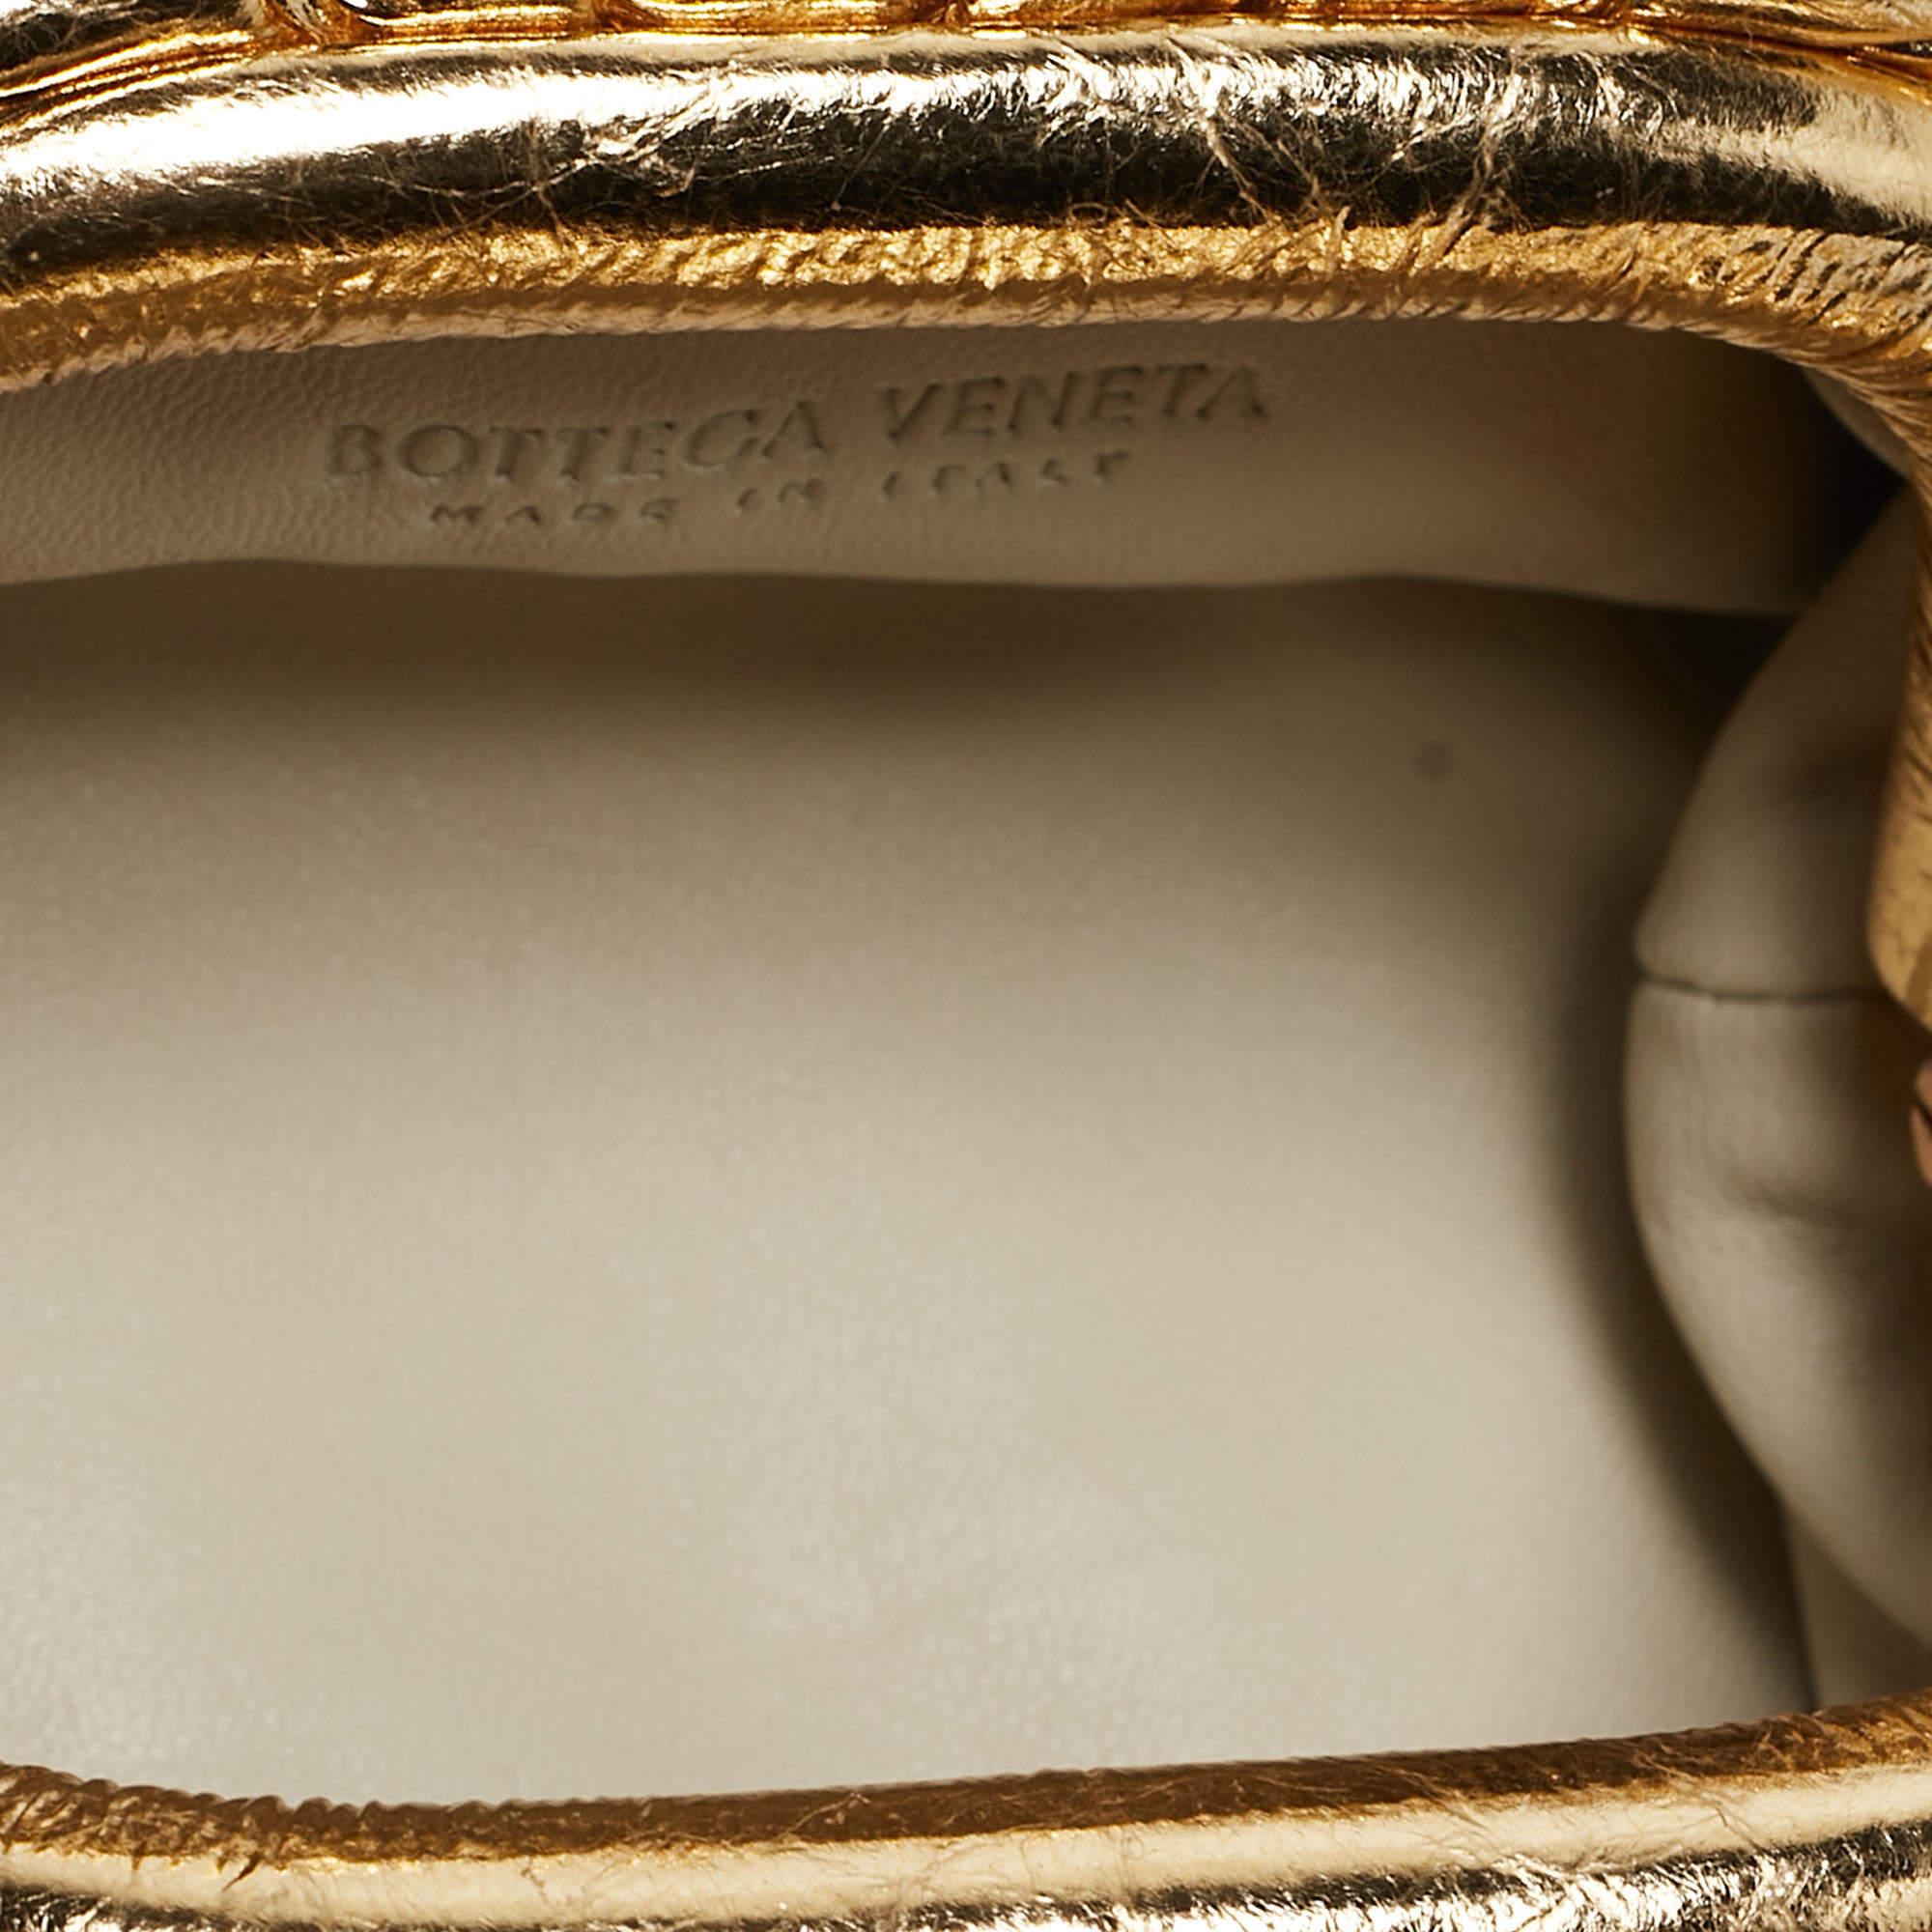 Bottega Veneta Metallic Gold Leather The Pouch Coin Purse 3